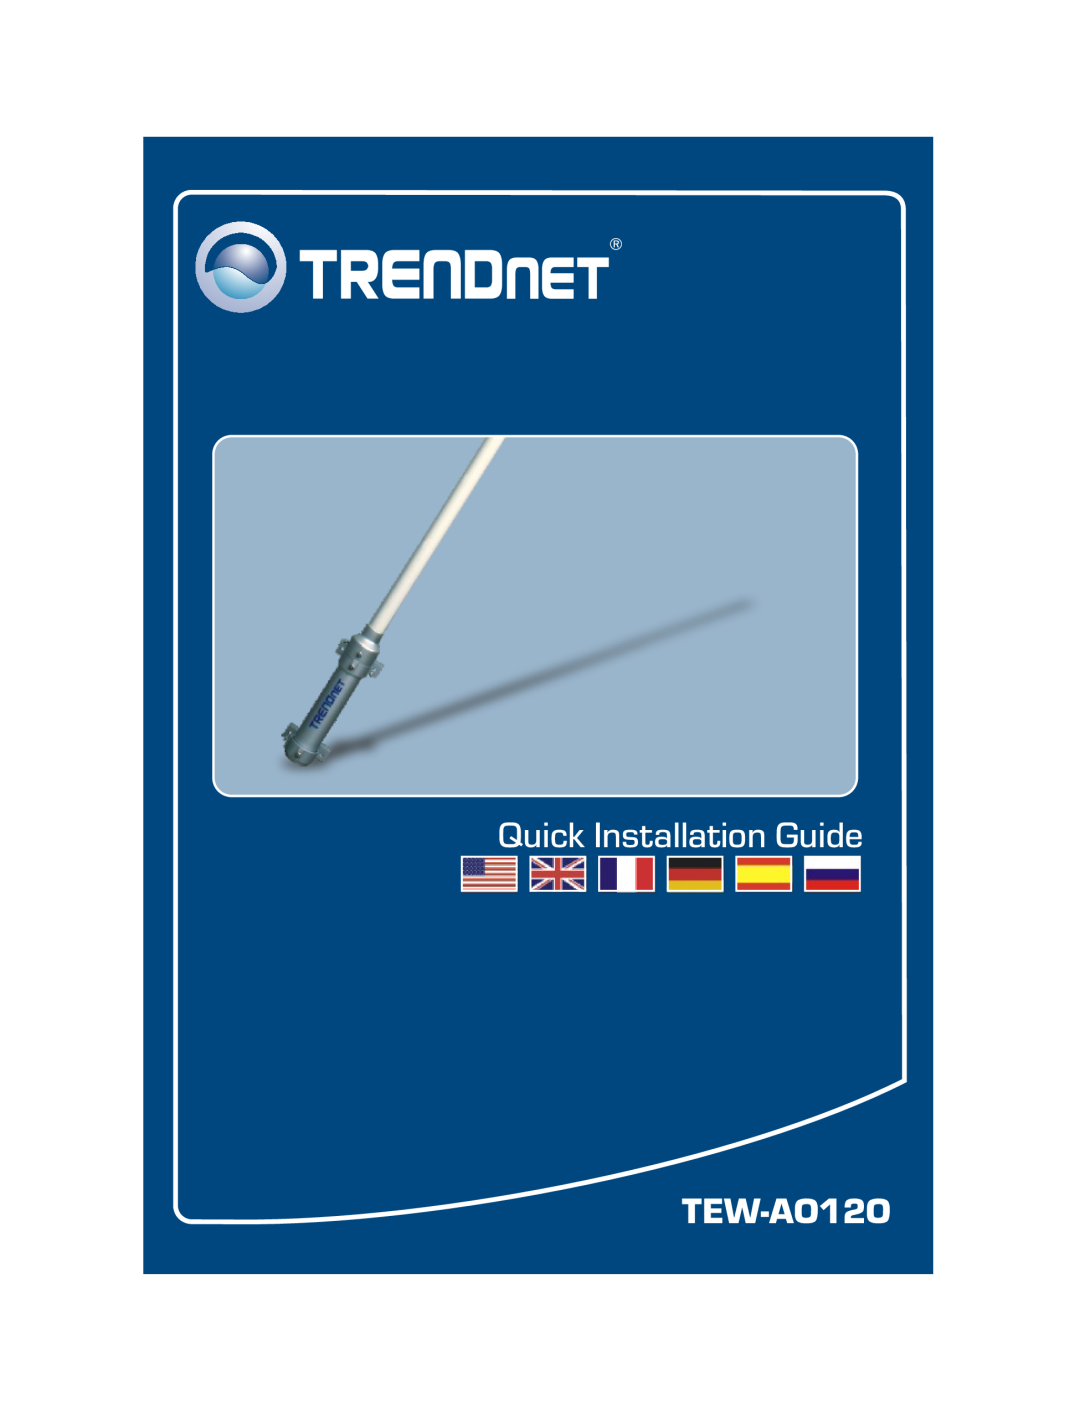 TRENDnet TEWAO12O manual Quick Installation Guide, TEW-AO12O 